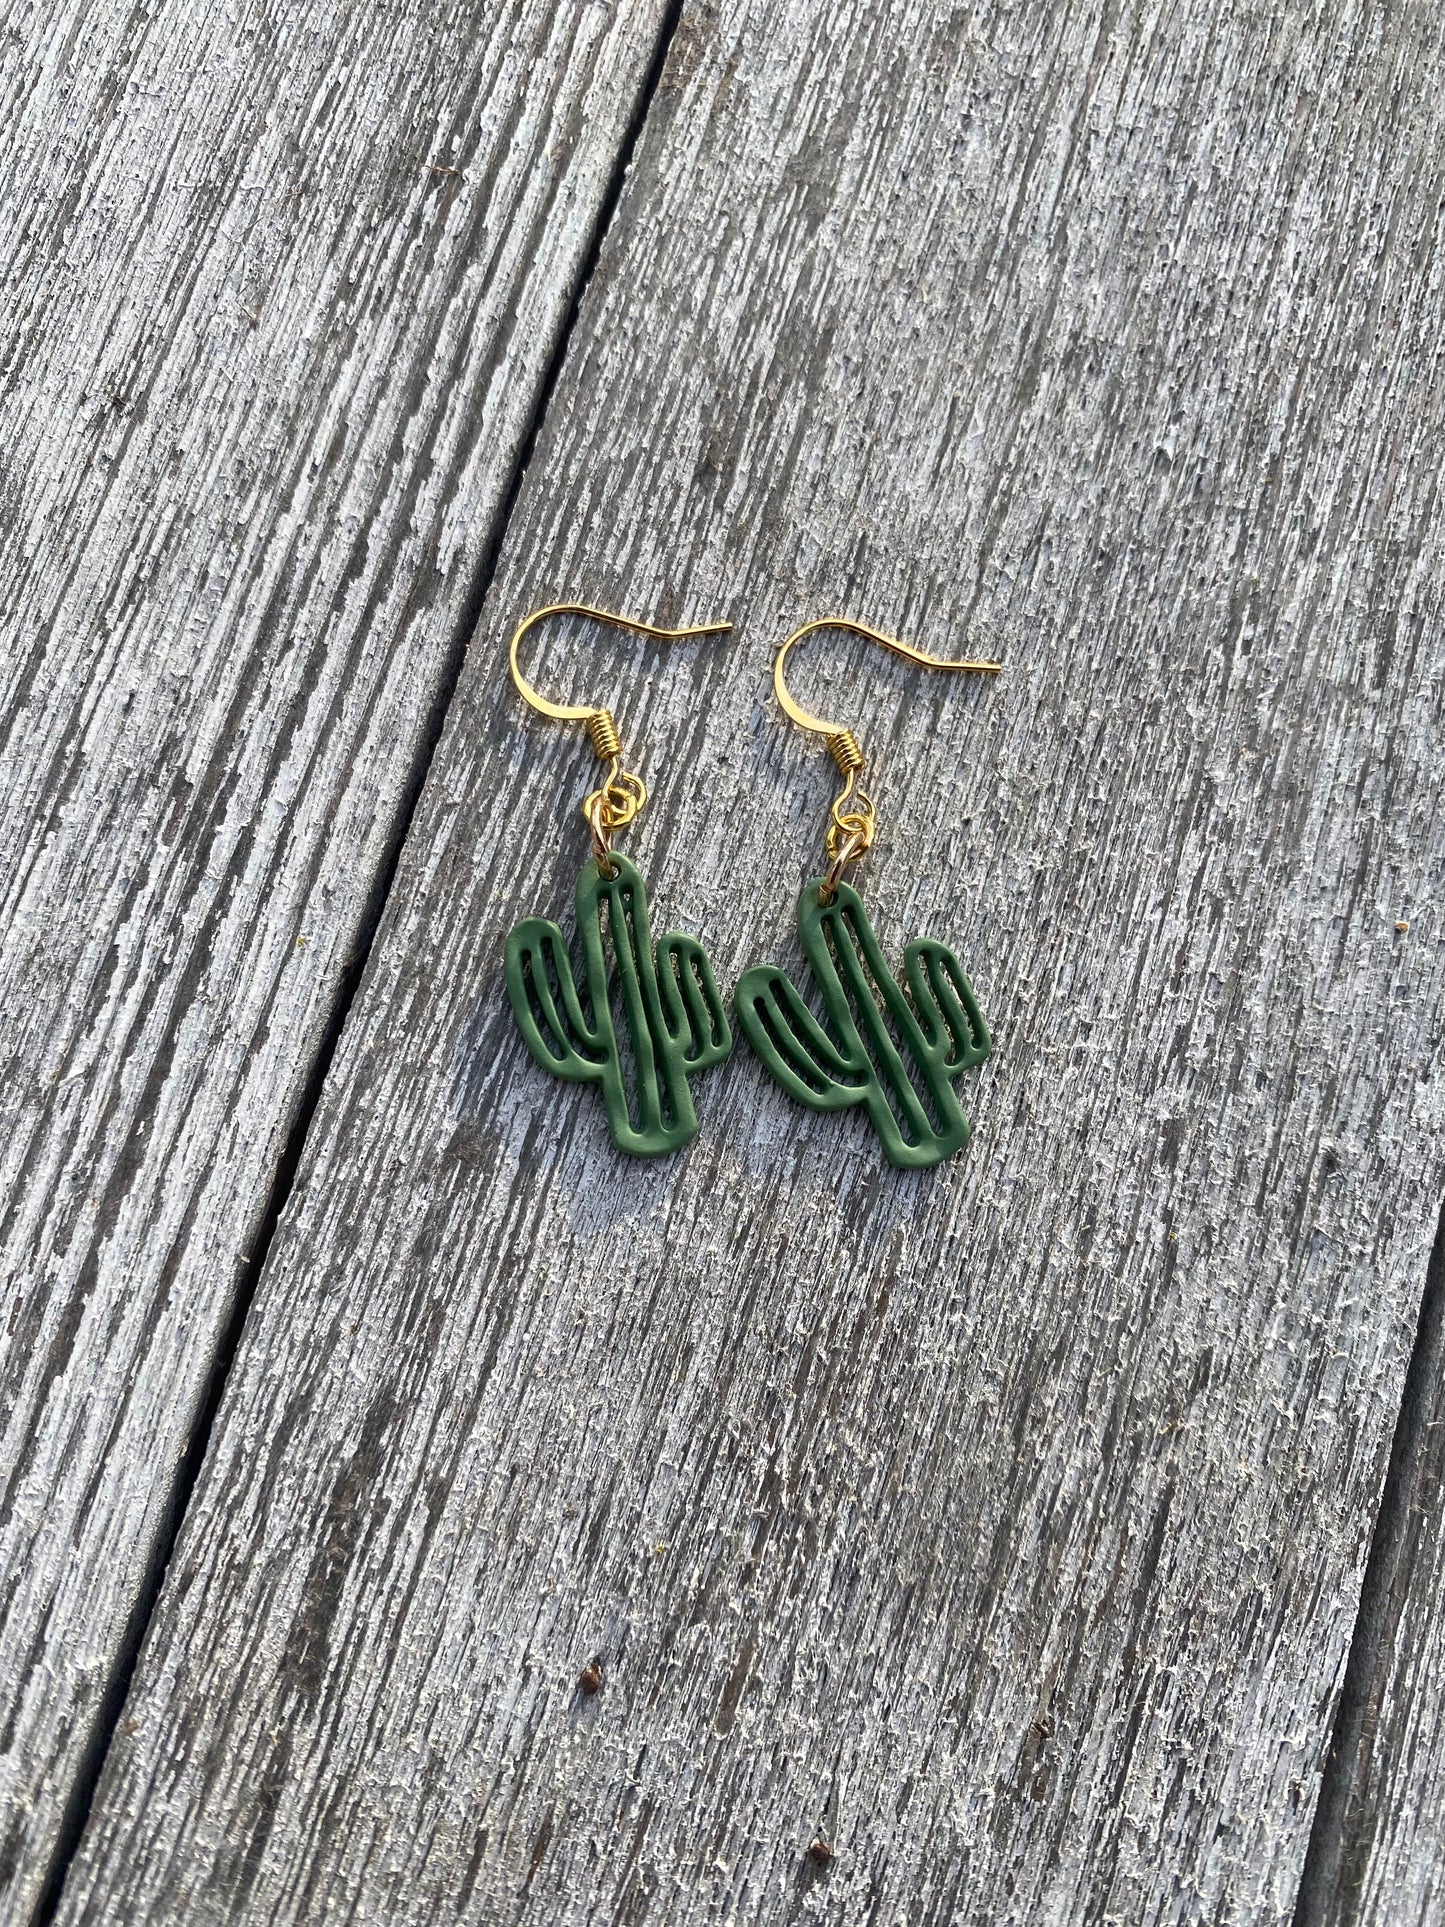 Cactus Dangle earrings